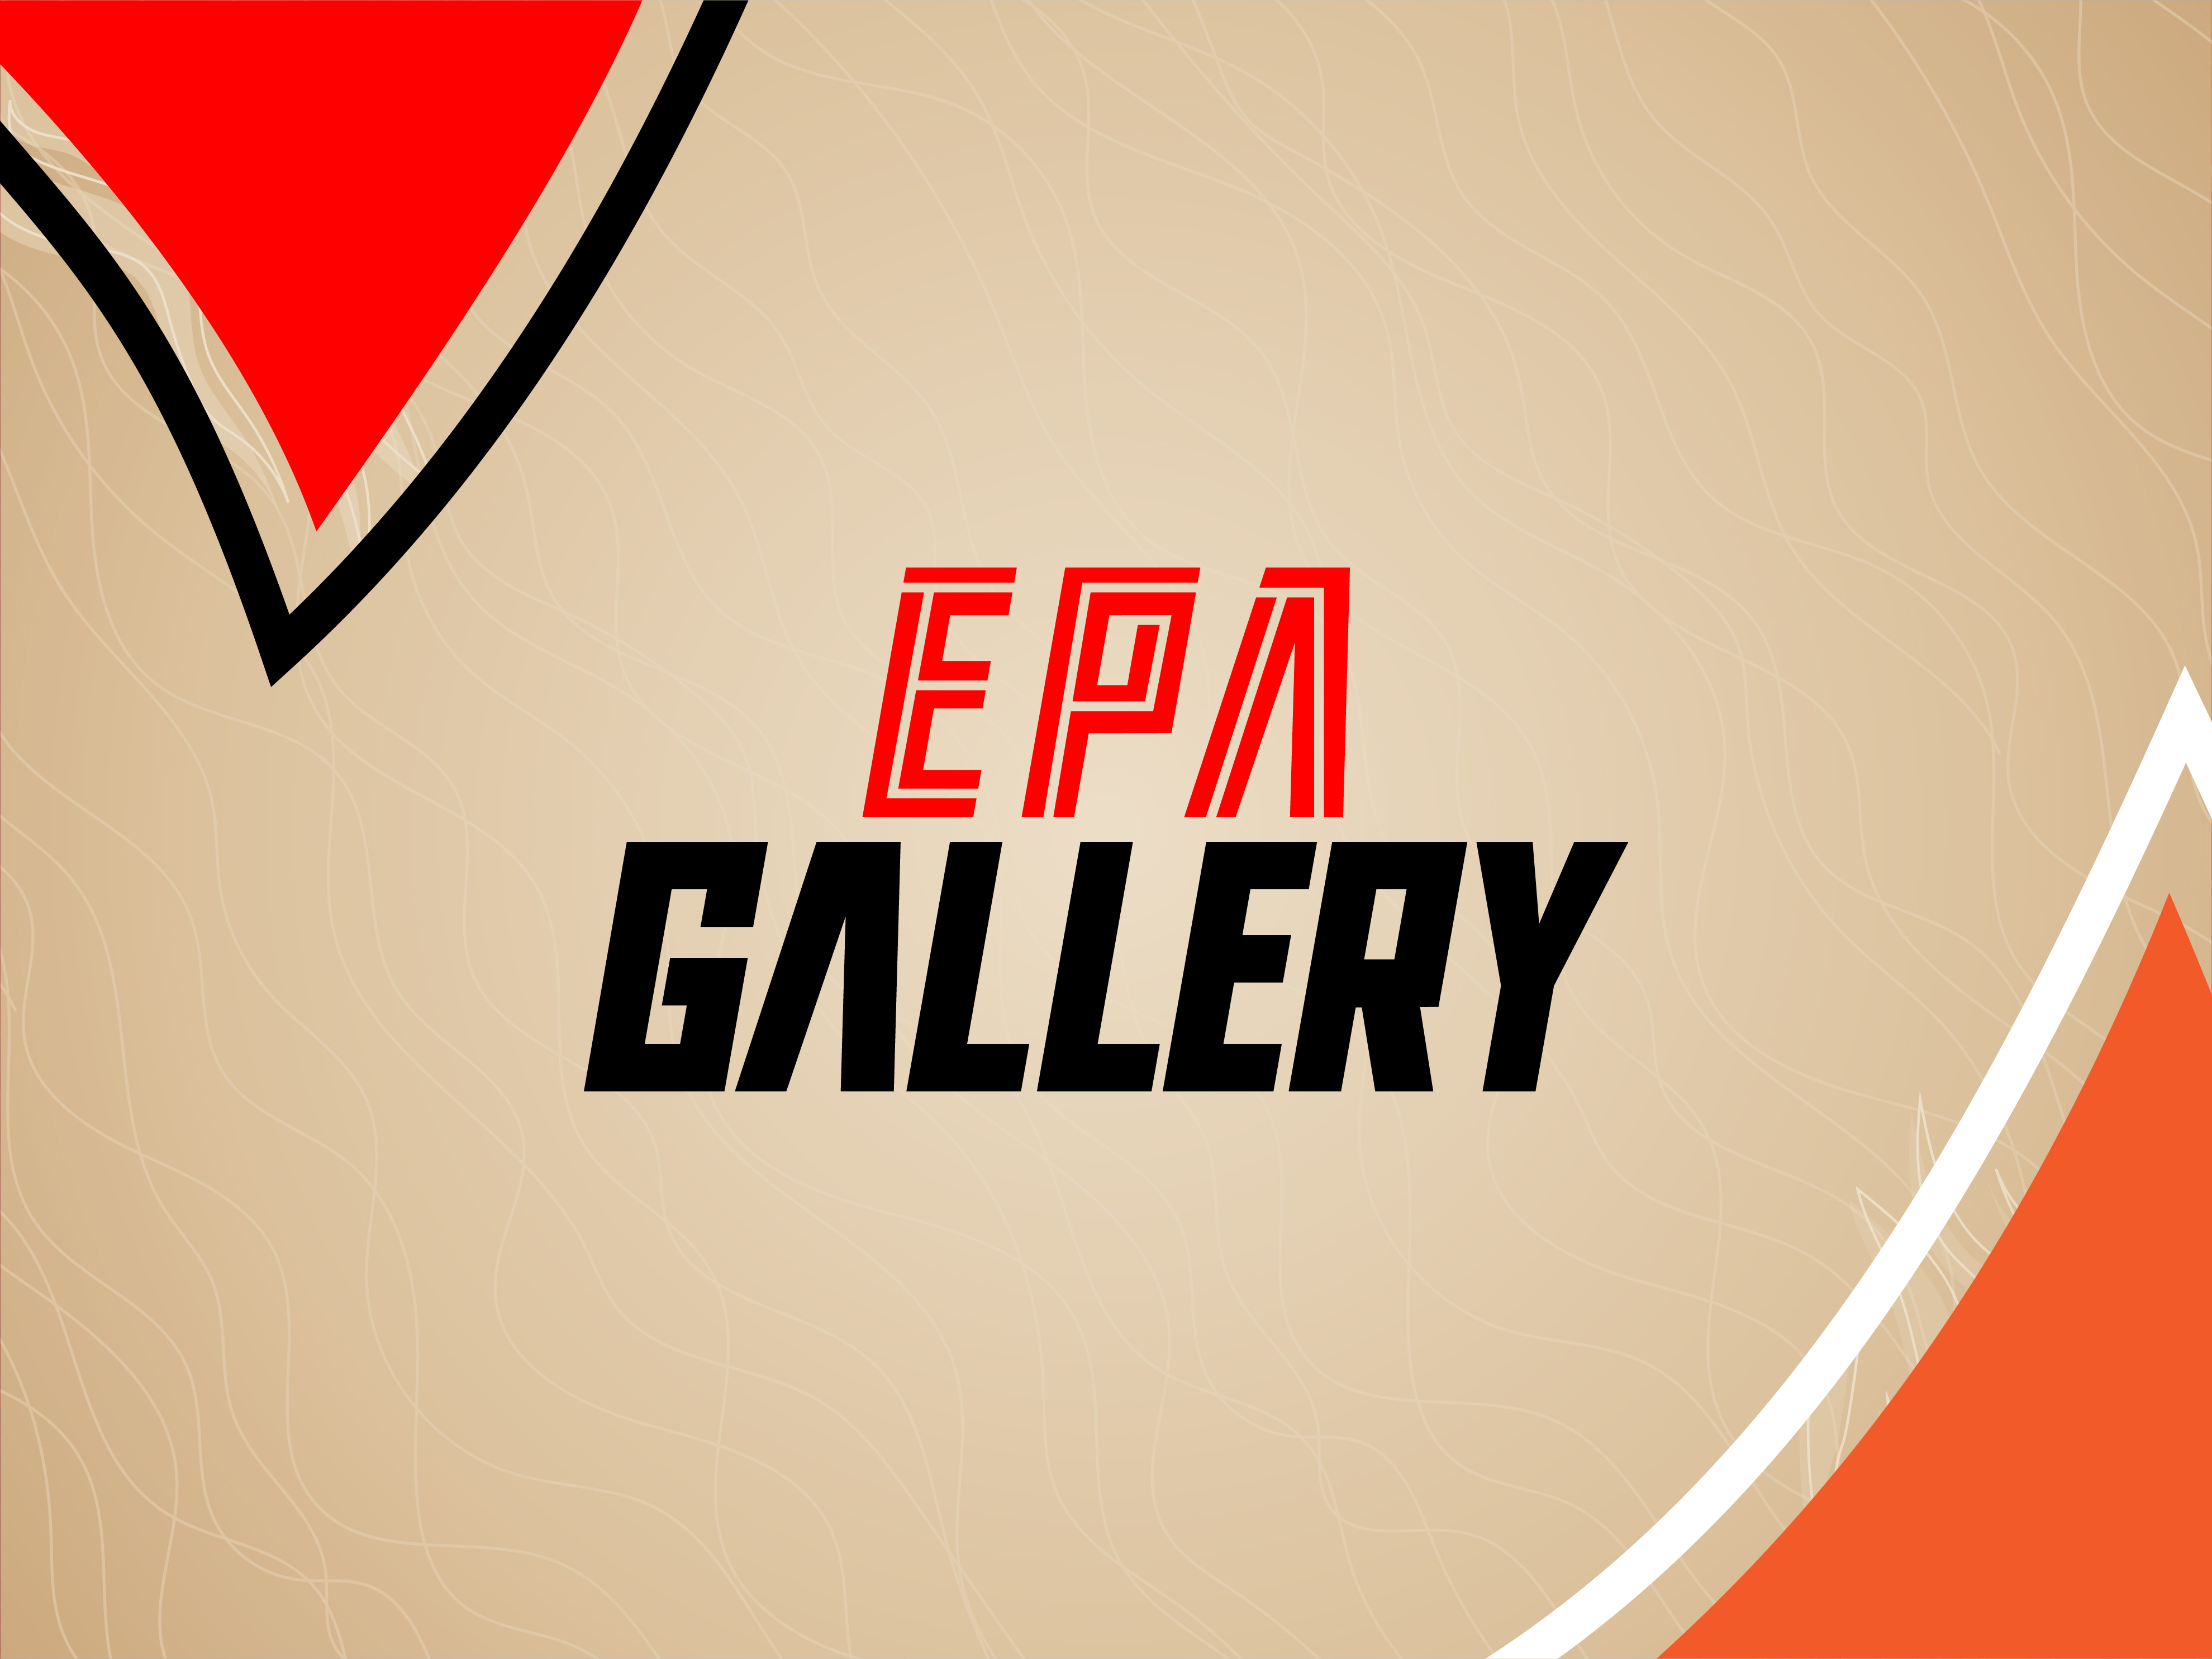 EPA Gallery